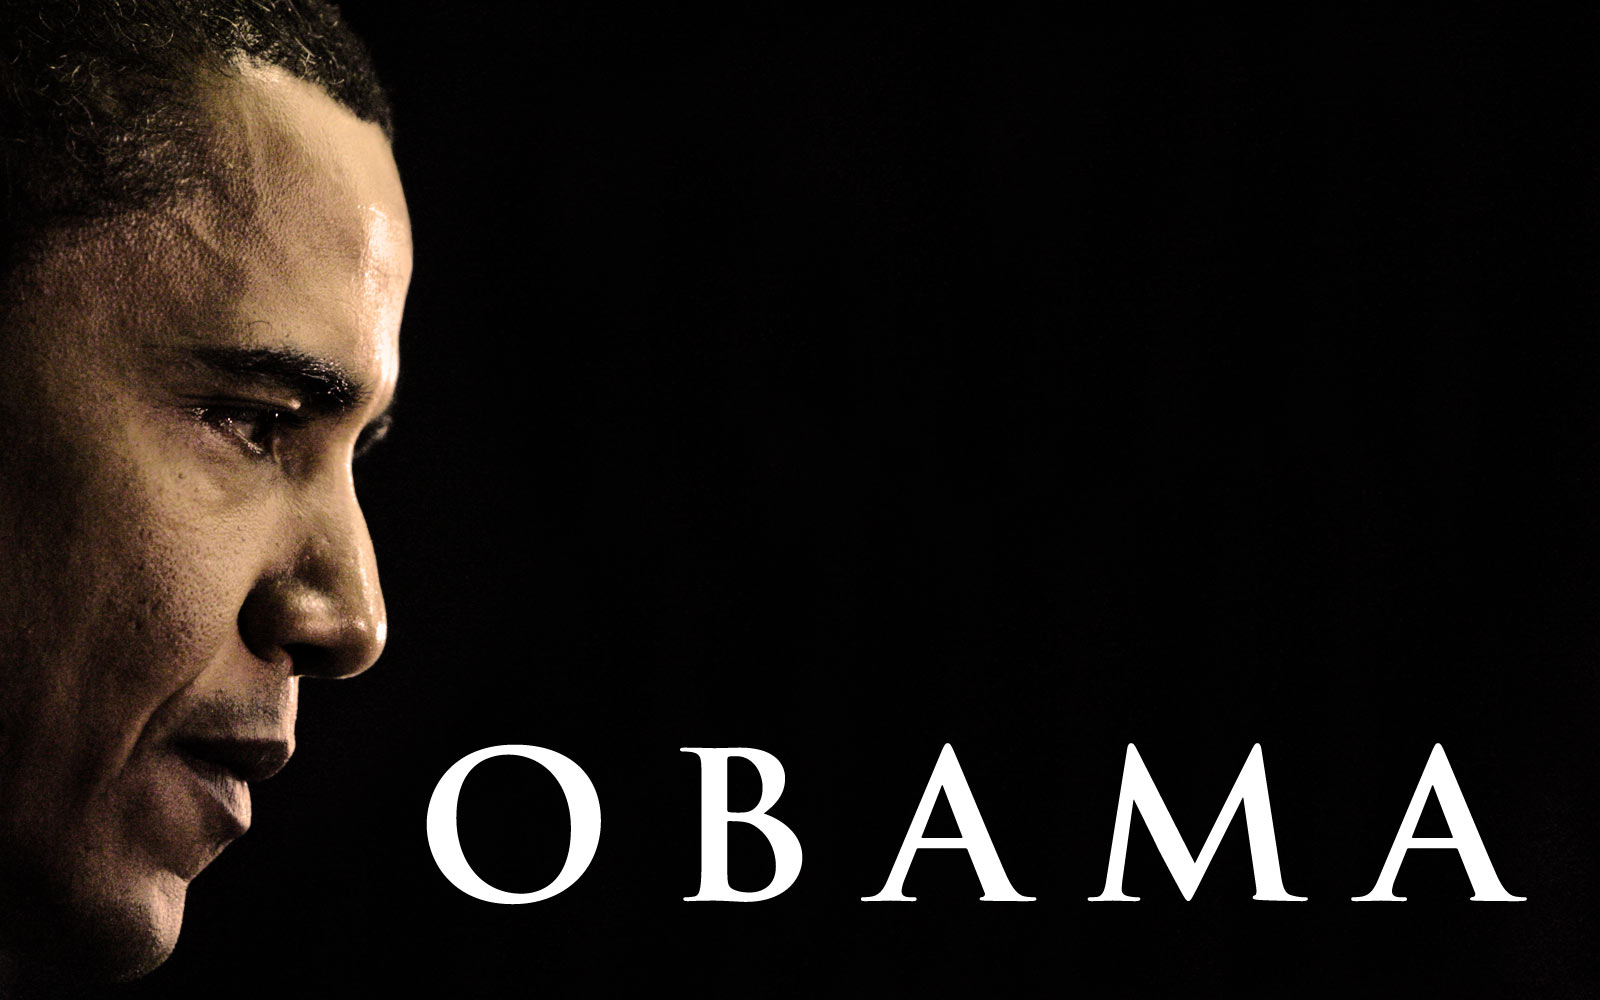 Barack Obama Wallpaper Full HD F42o41f 4usky